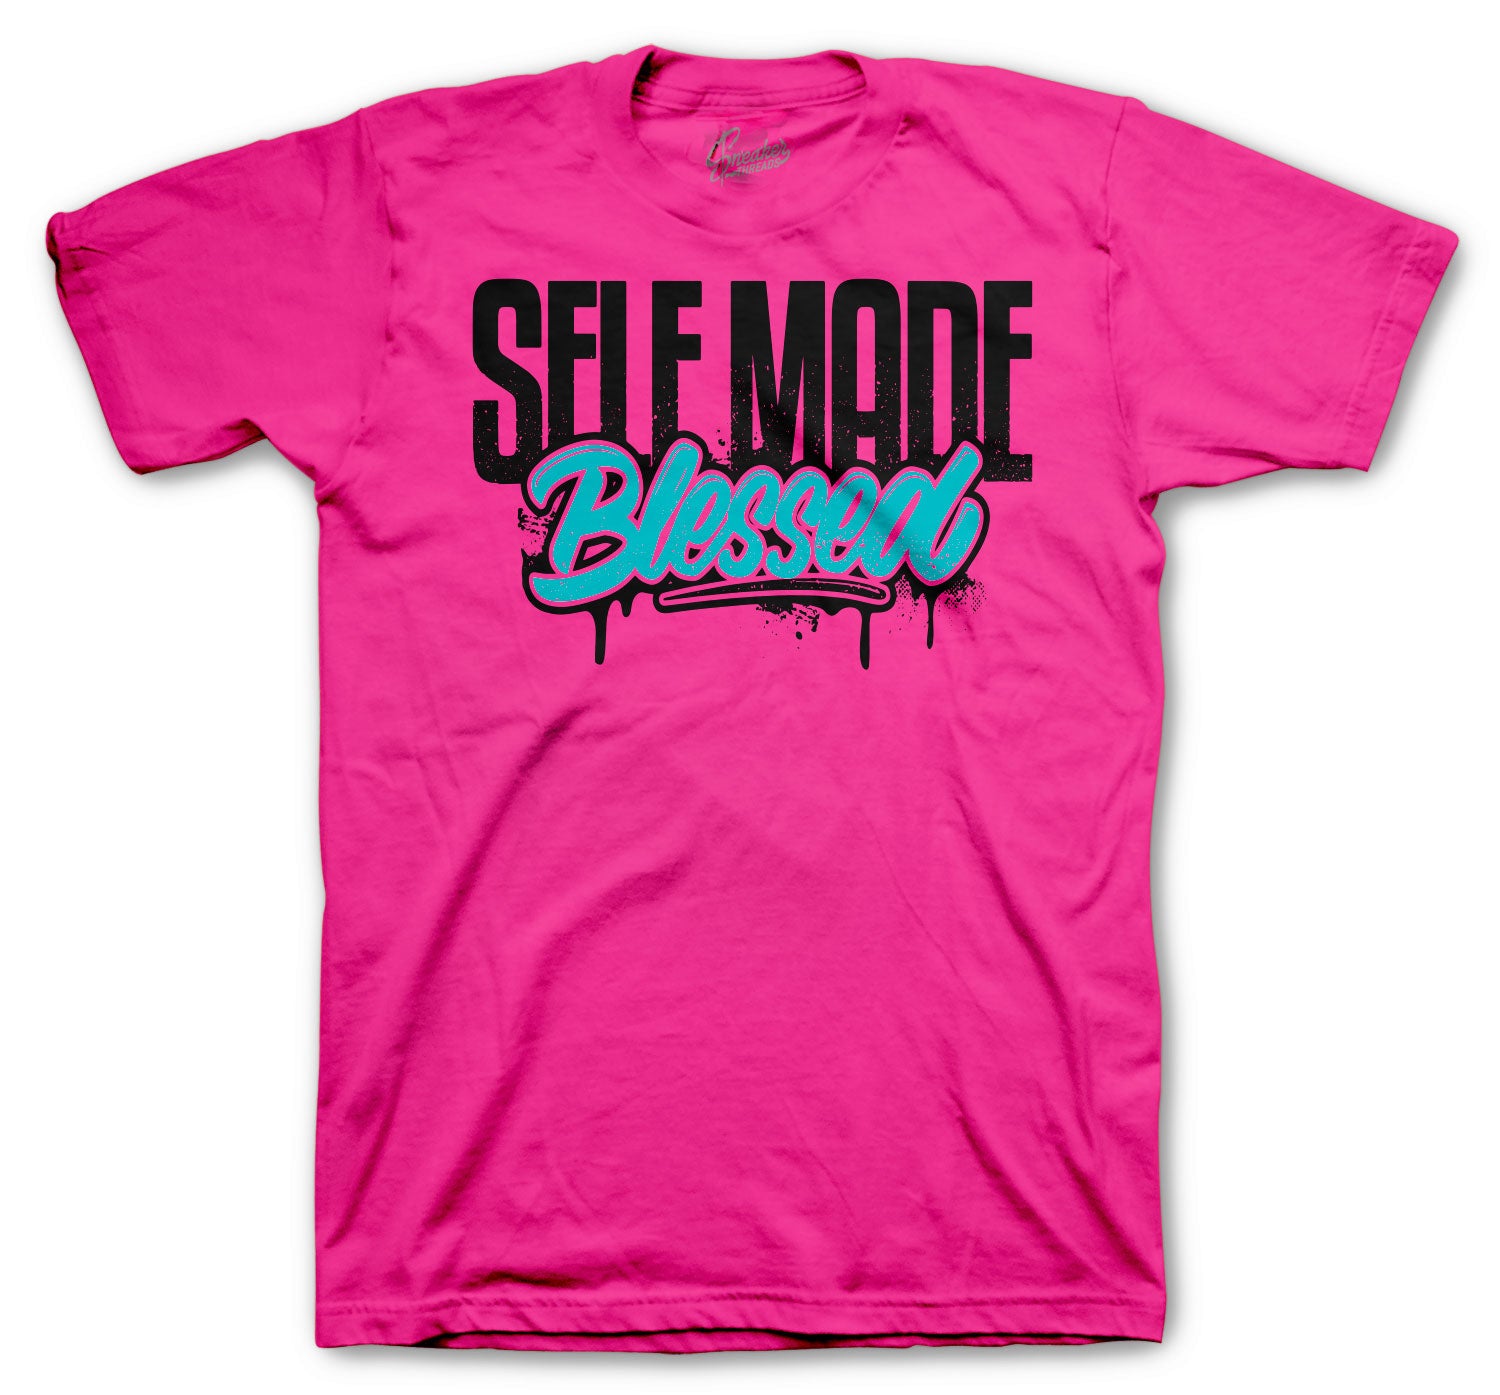 South Beach 8 Shirt - Self Made - Pink